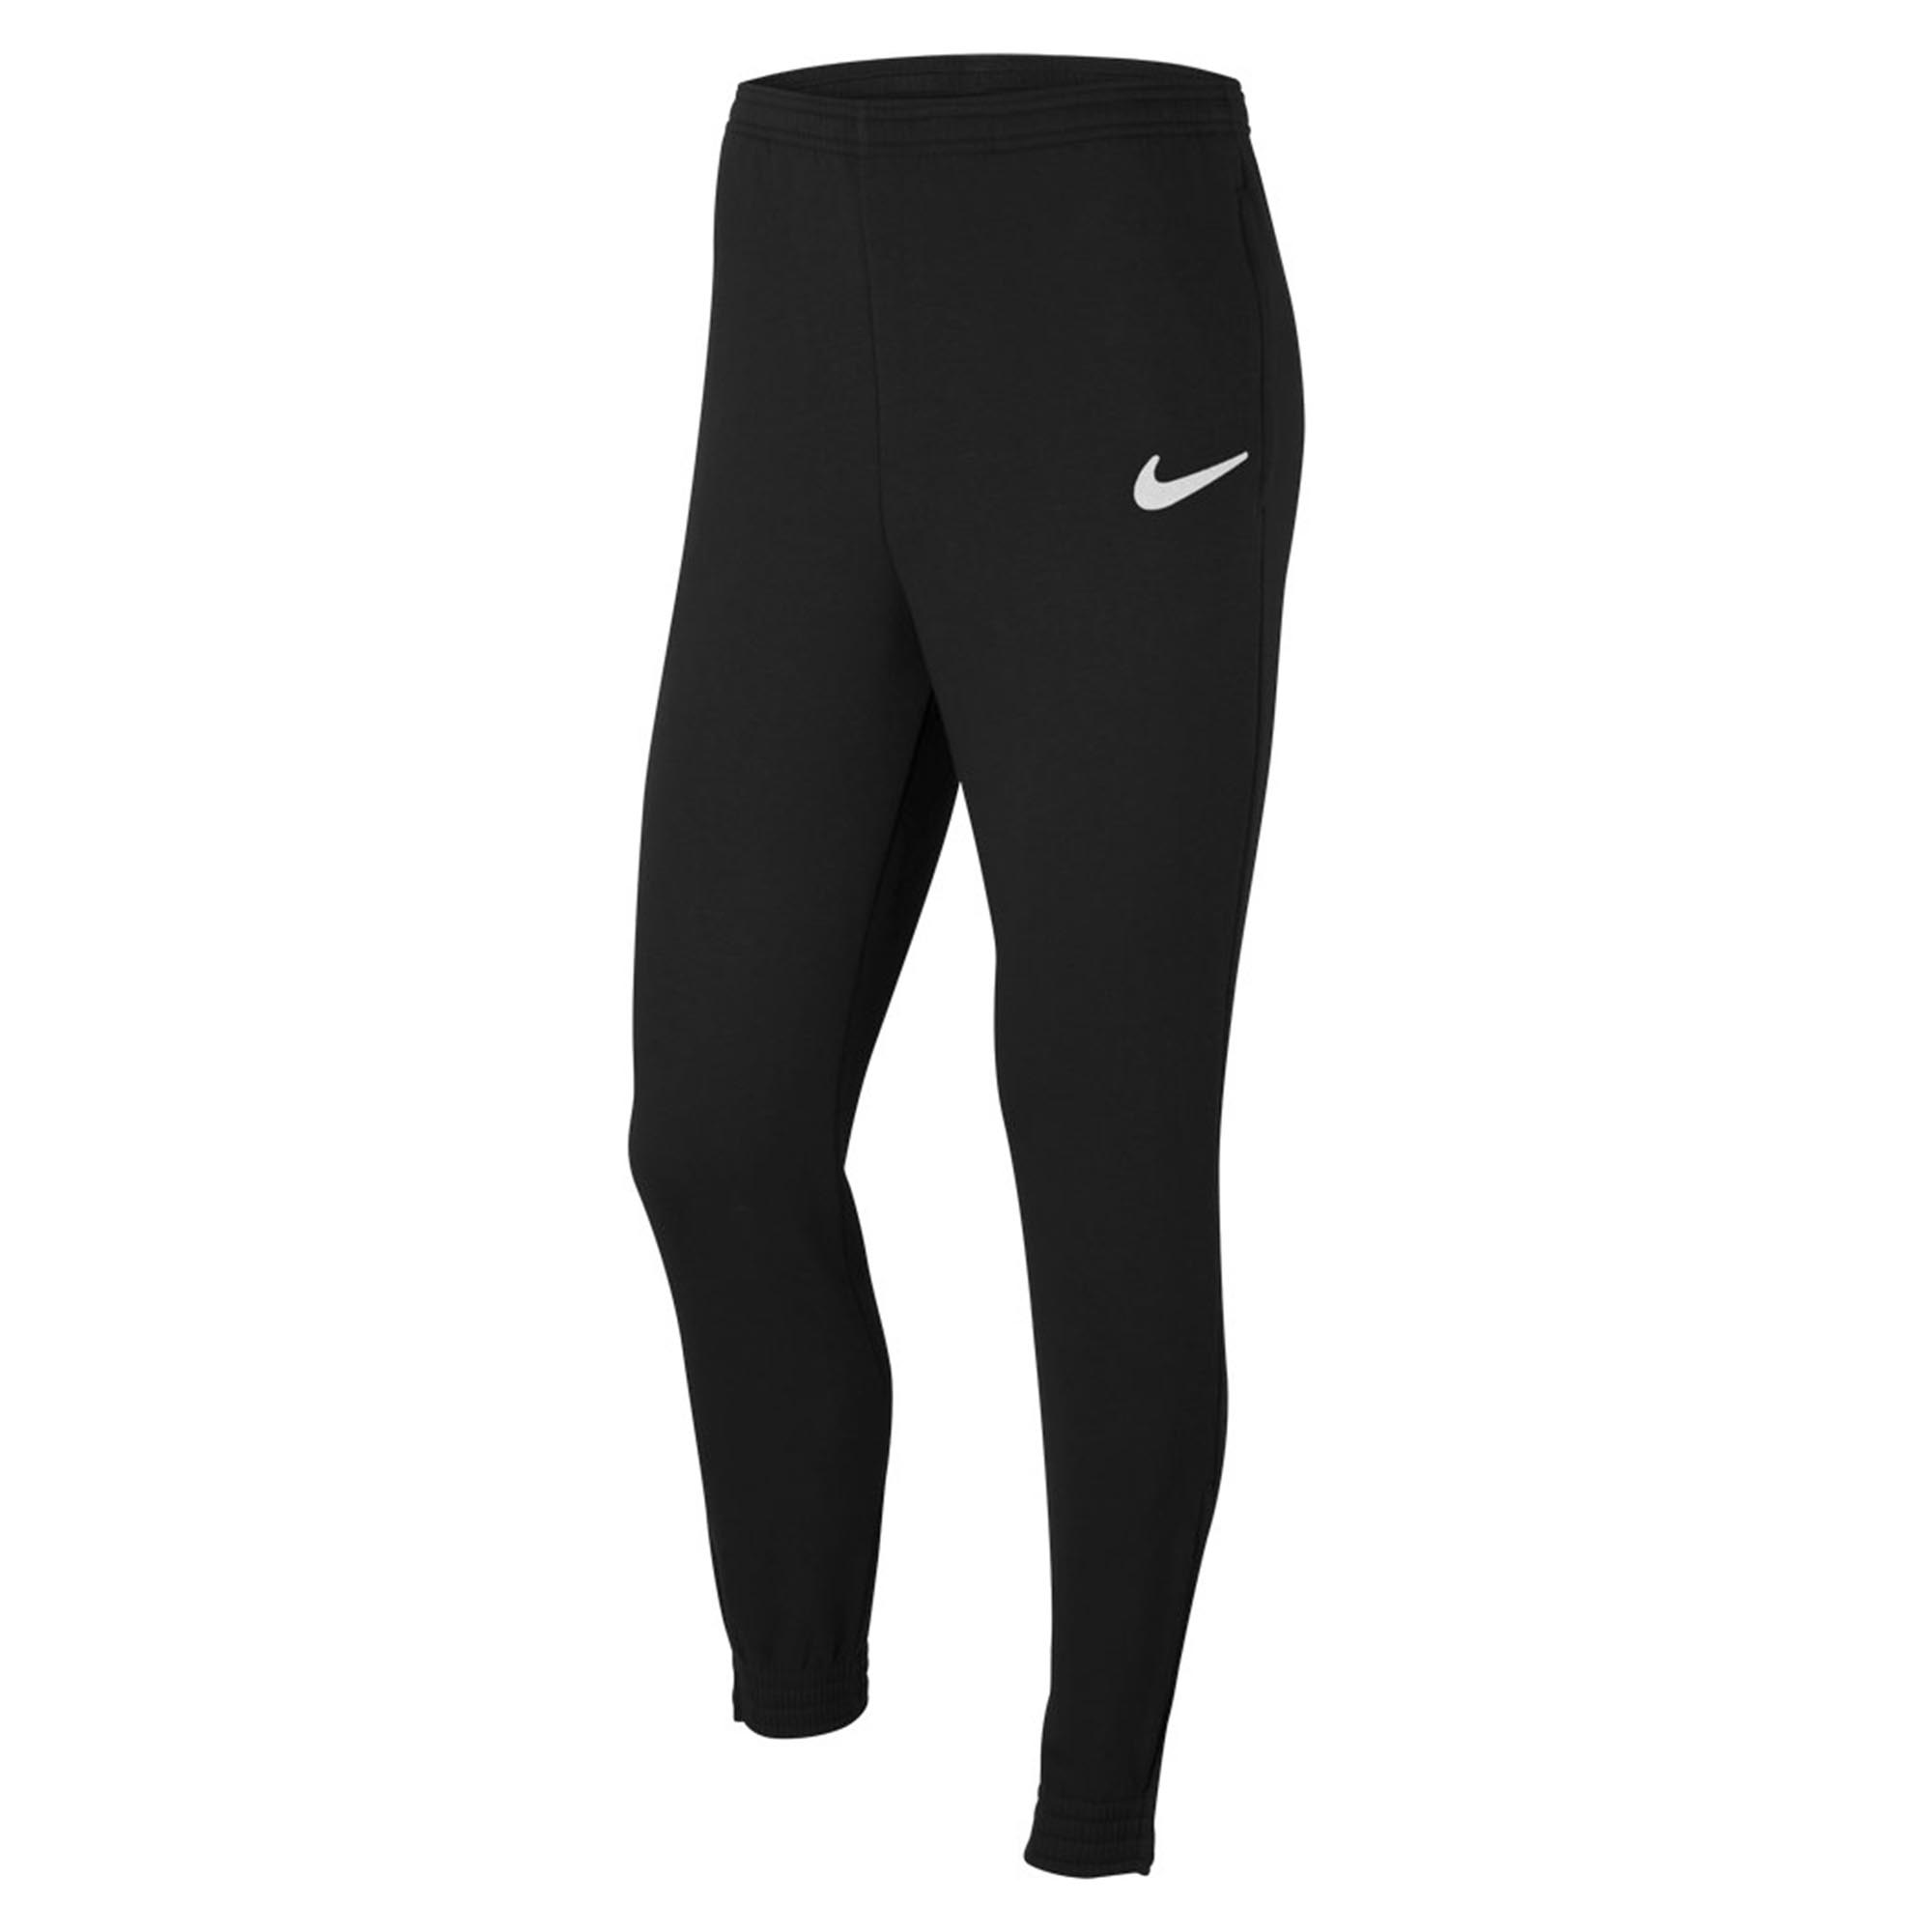 Nike Herren Trainingshose TEAM CLUB 20 Pants schwarz Jogginghose